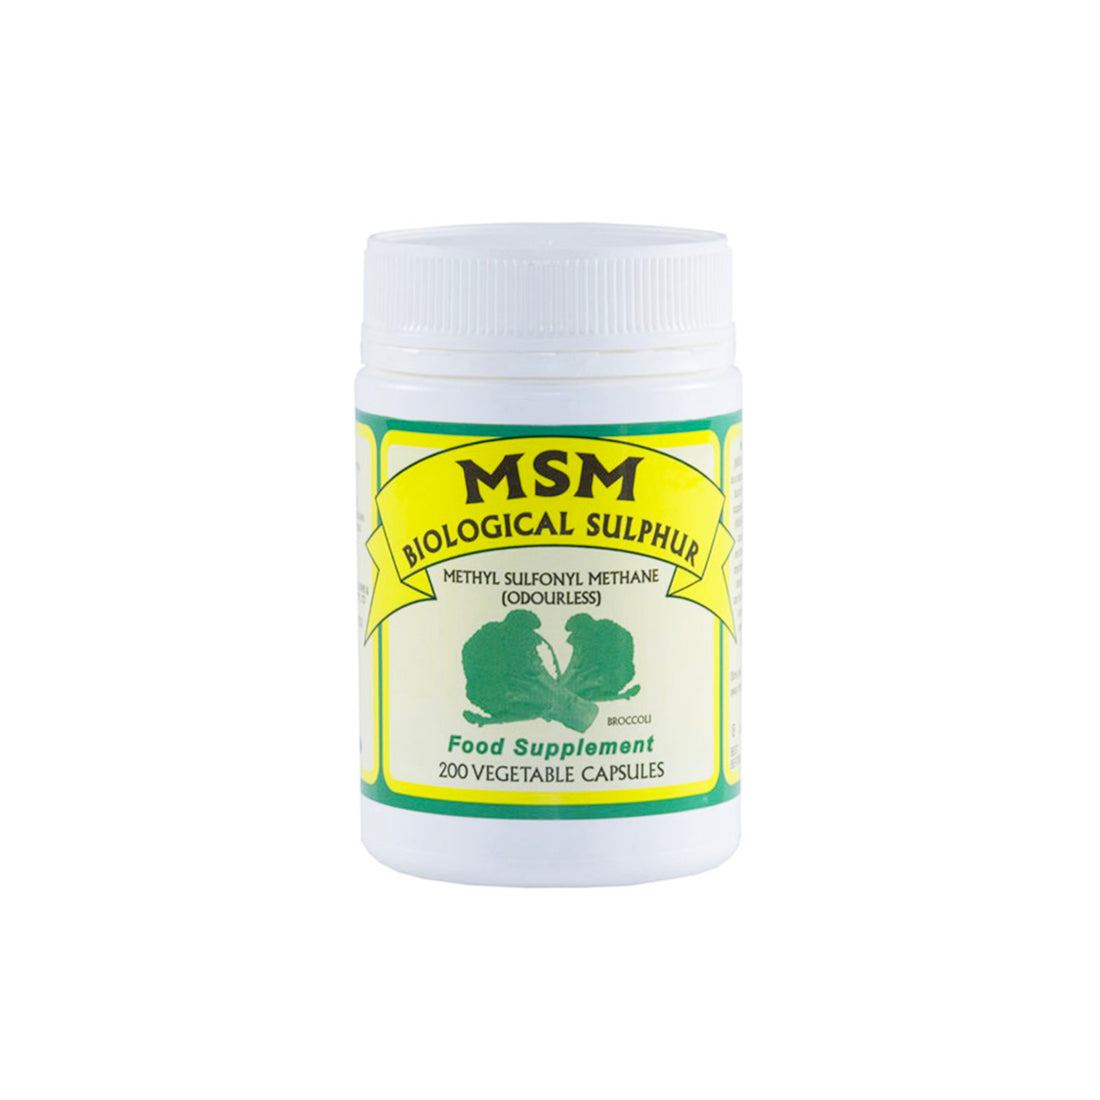 MSM Biological Sulphur 200 Vege Capsules